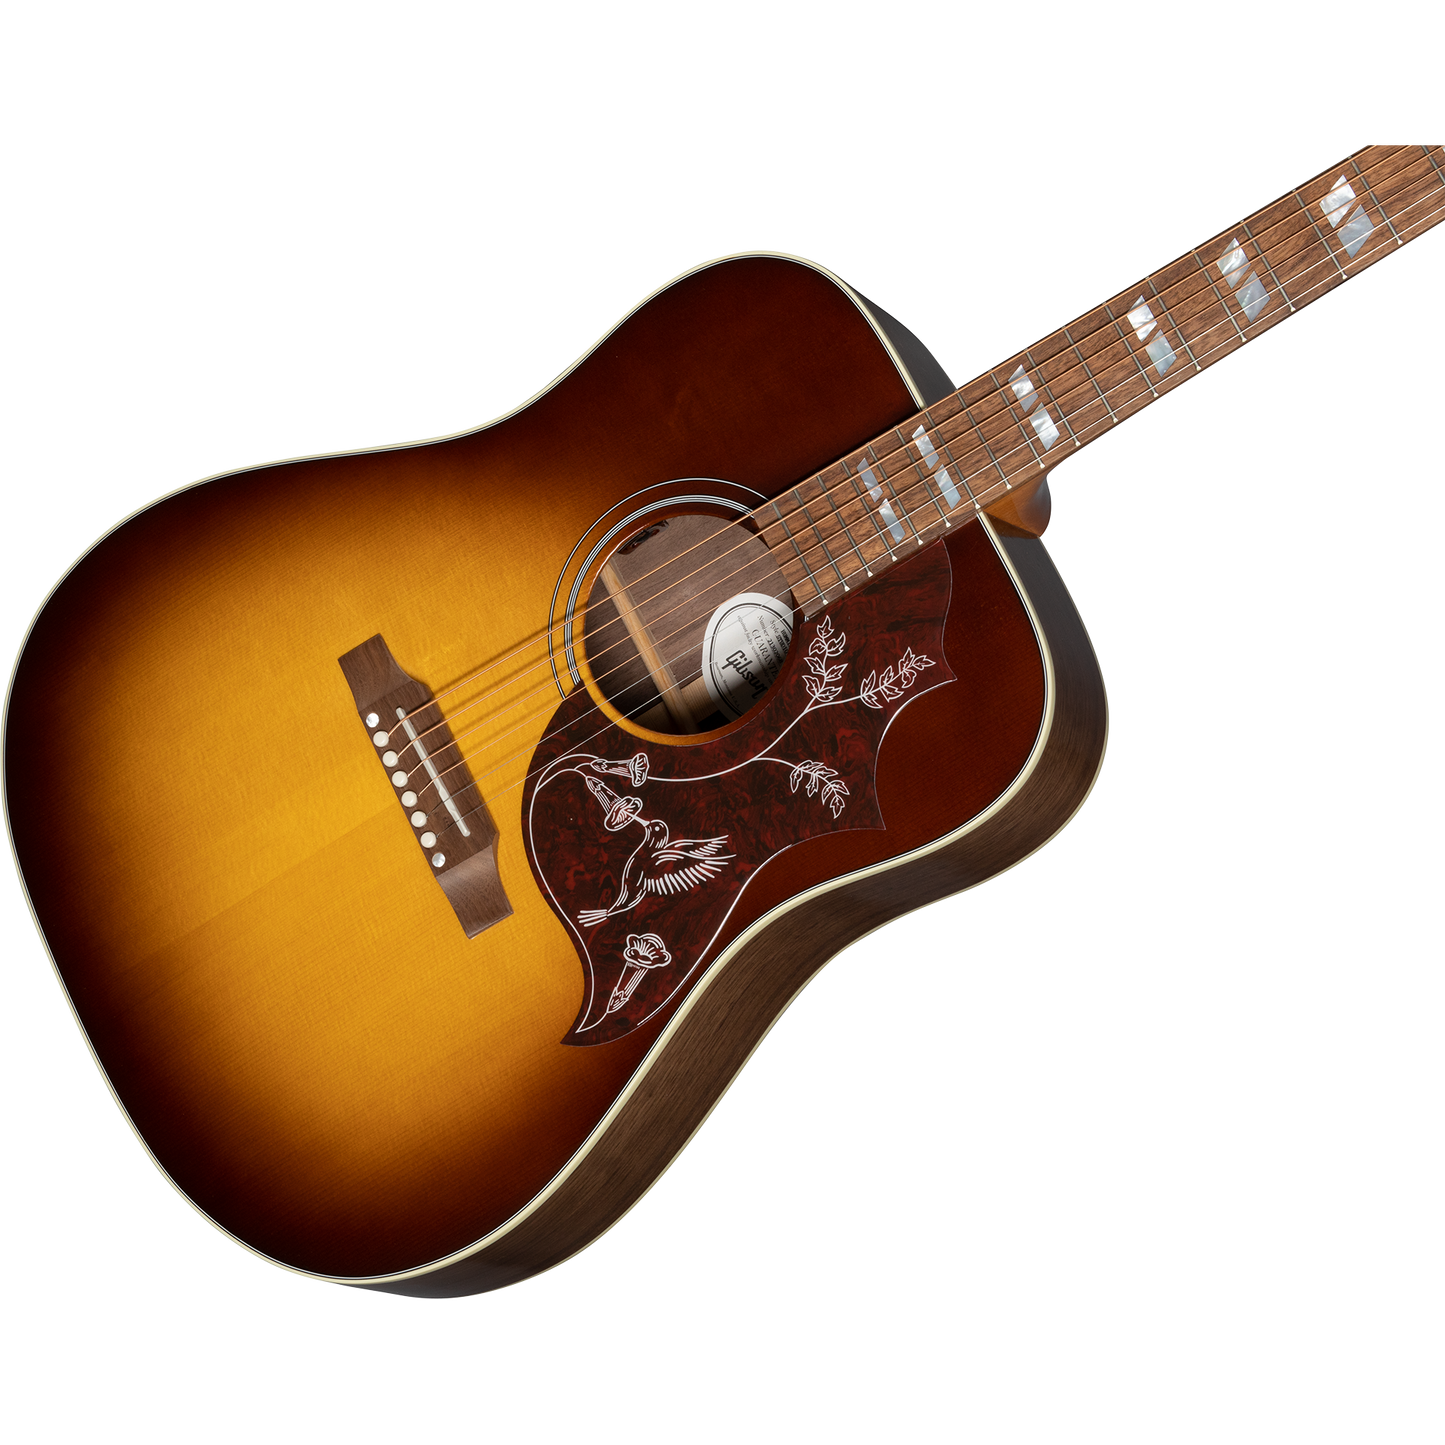 Gibson Hummingbird Studio Walnut Acoustic Guitar, Satin Walnut Burst